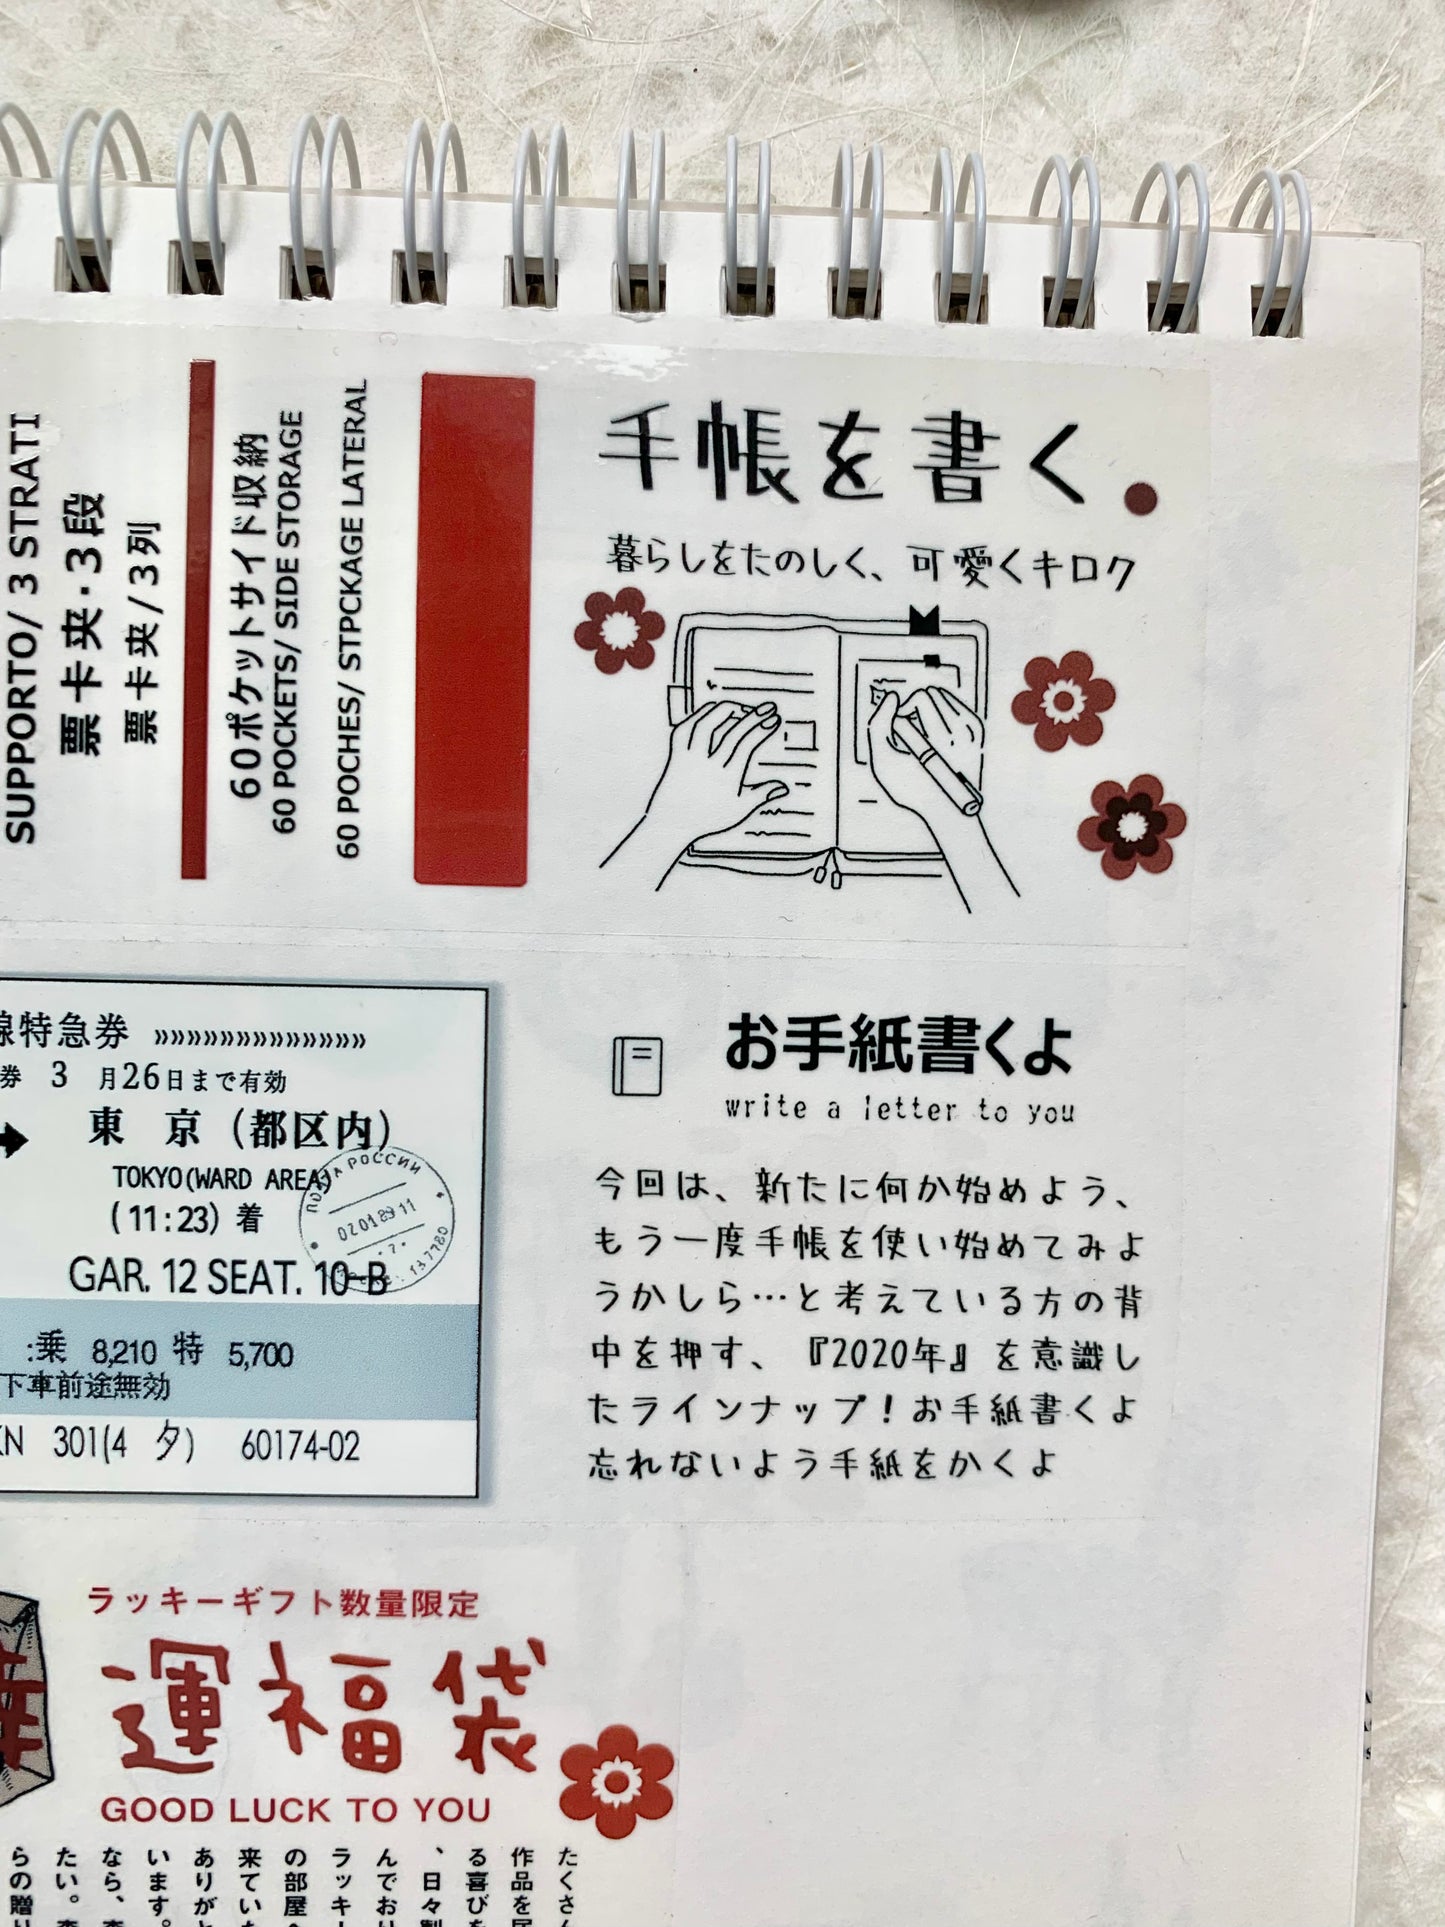 QQY - Ticket Collection | 4.5cm PET Tape | Release Paper